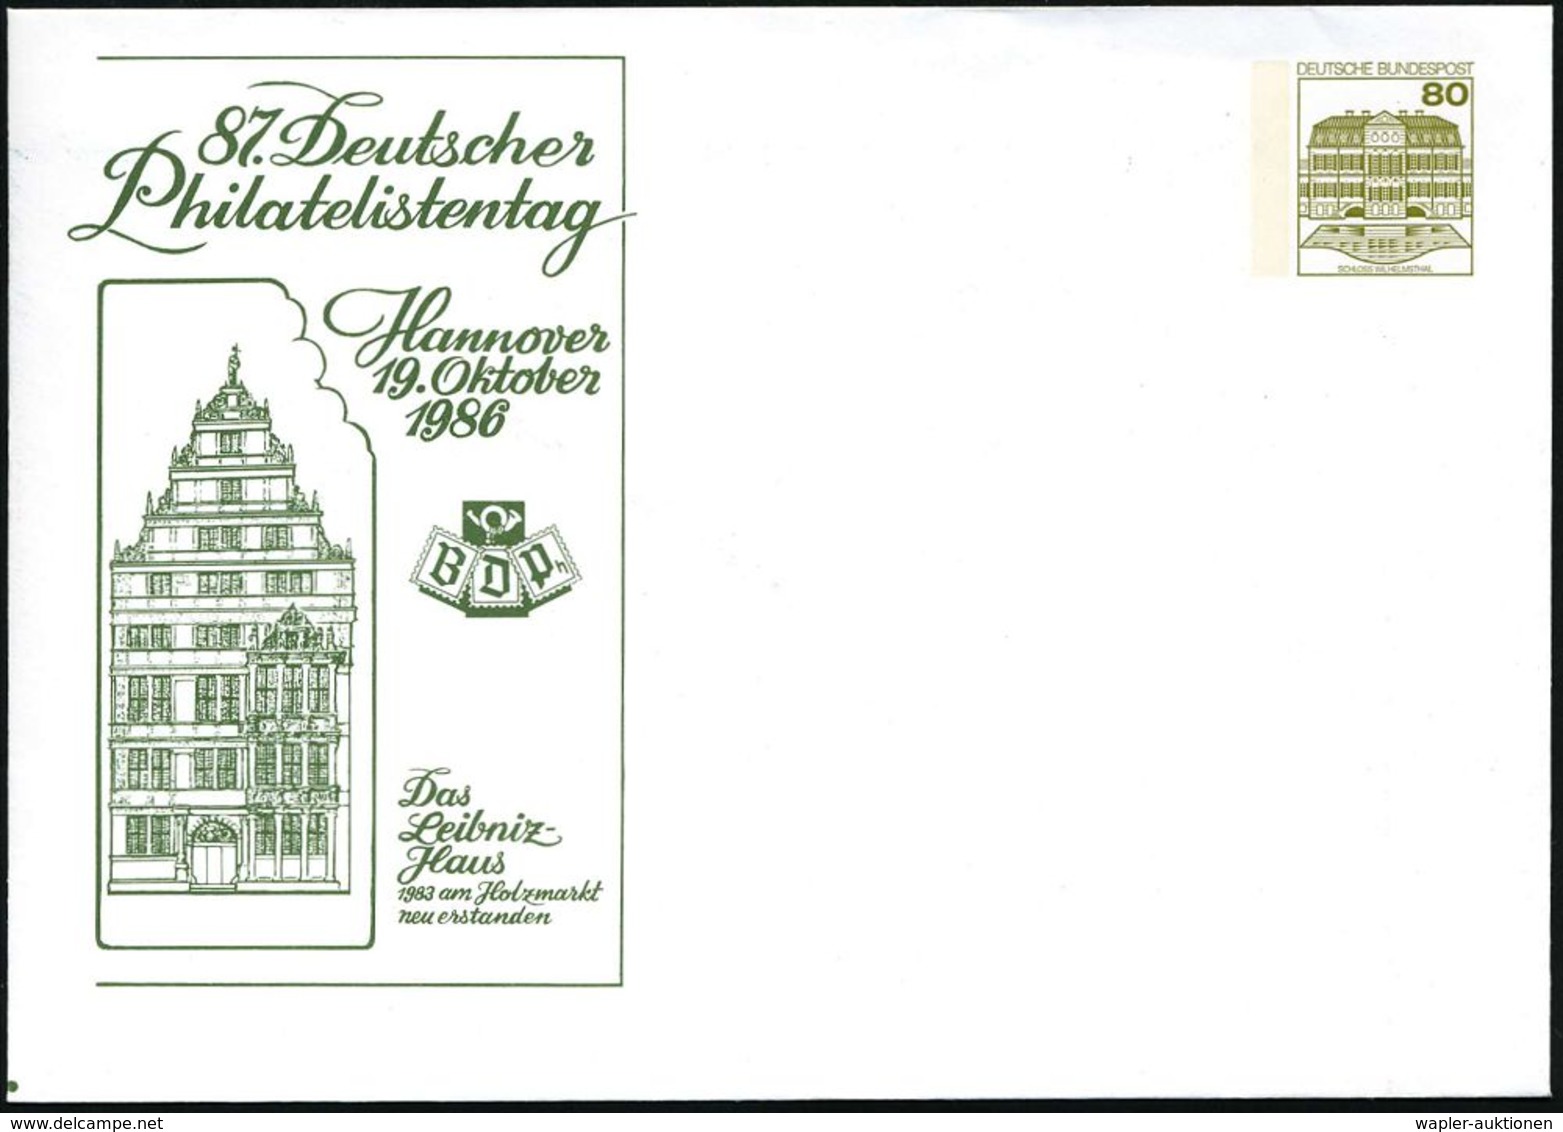 BERÜHMTE MATHEMATIKER : Hannover 1986 (19.10.) PU 80 Pf. Burgen; 87. Deutscher Philatel.Tag/ Das  L E I B N I T Z - Haus - Non Classés